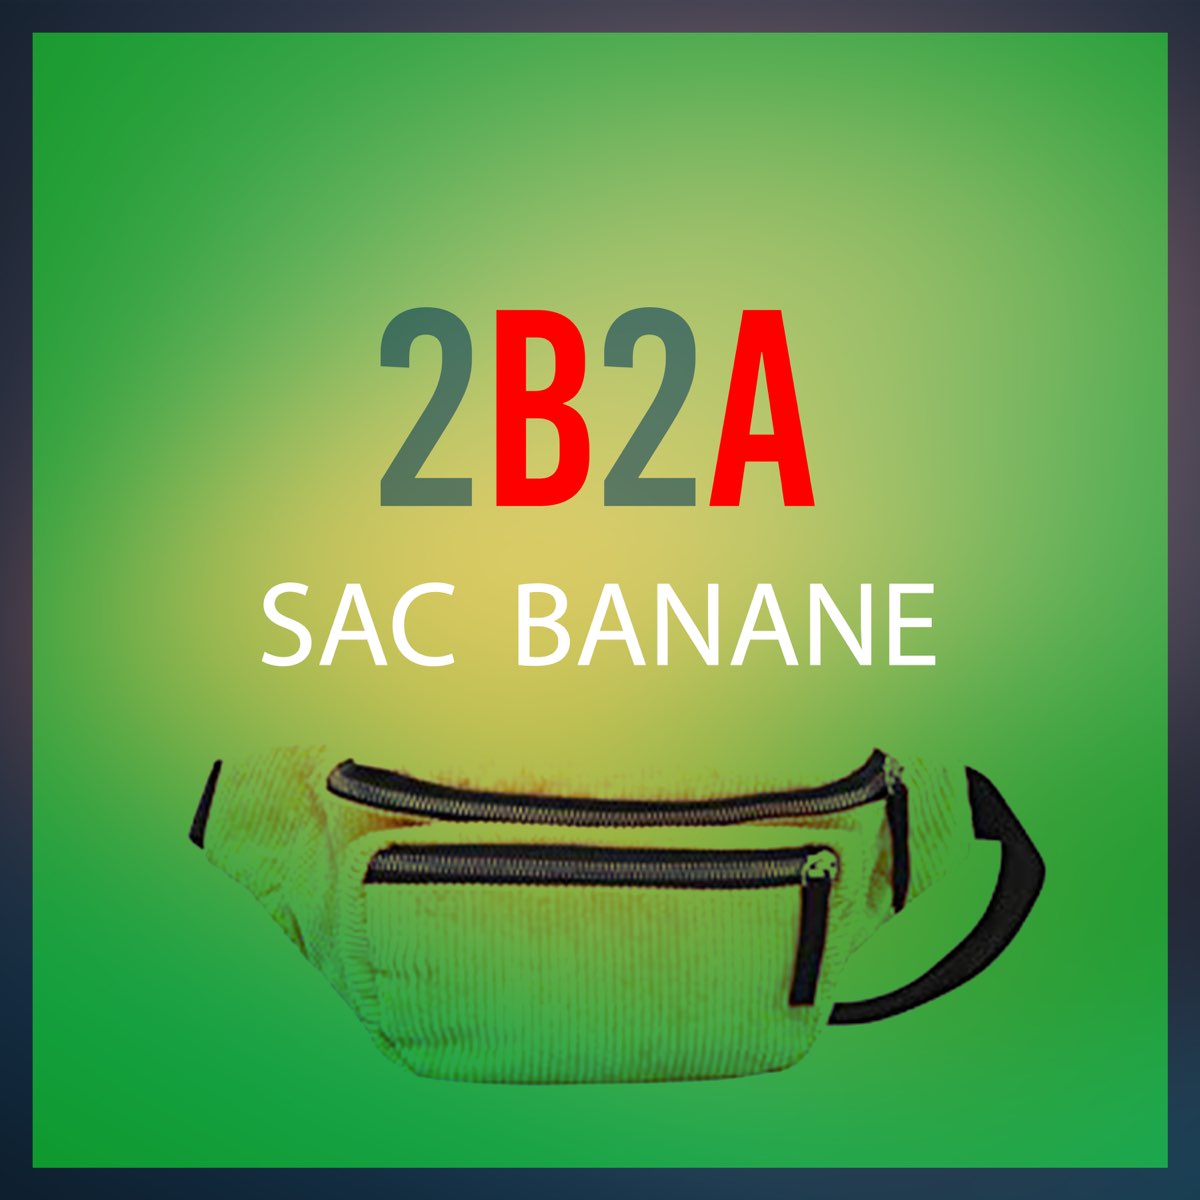 Sac banane - Single - Album by 2B2A - Apple Music